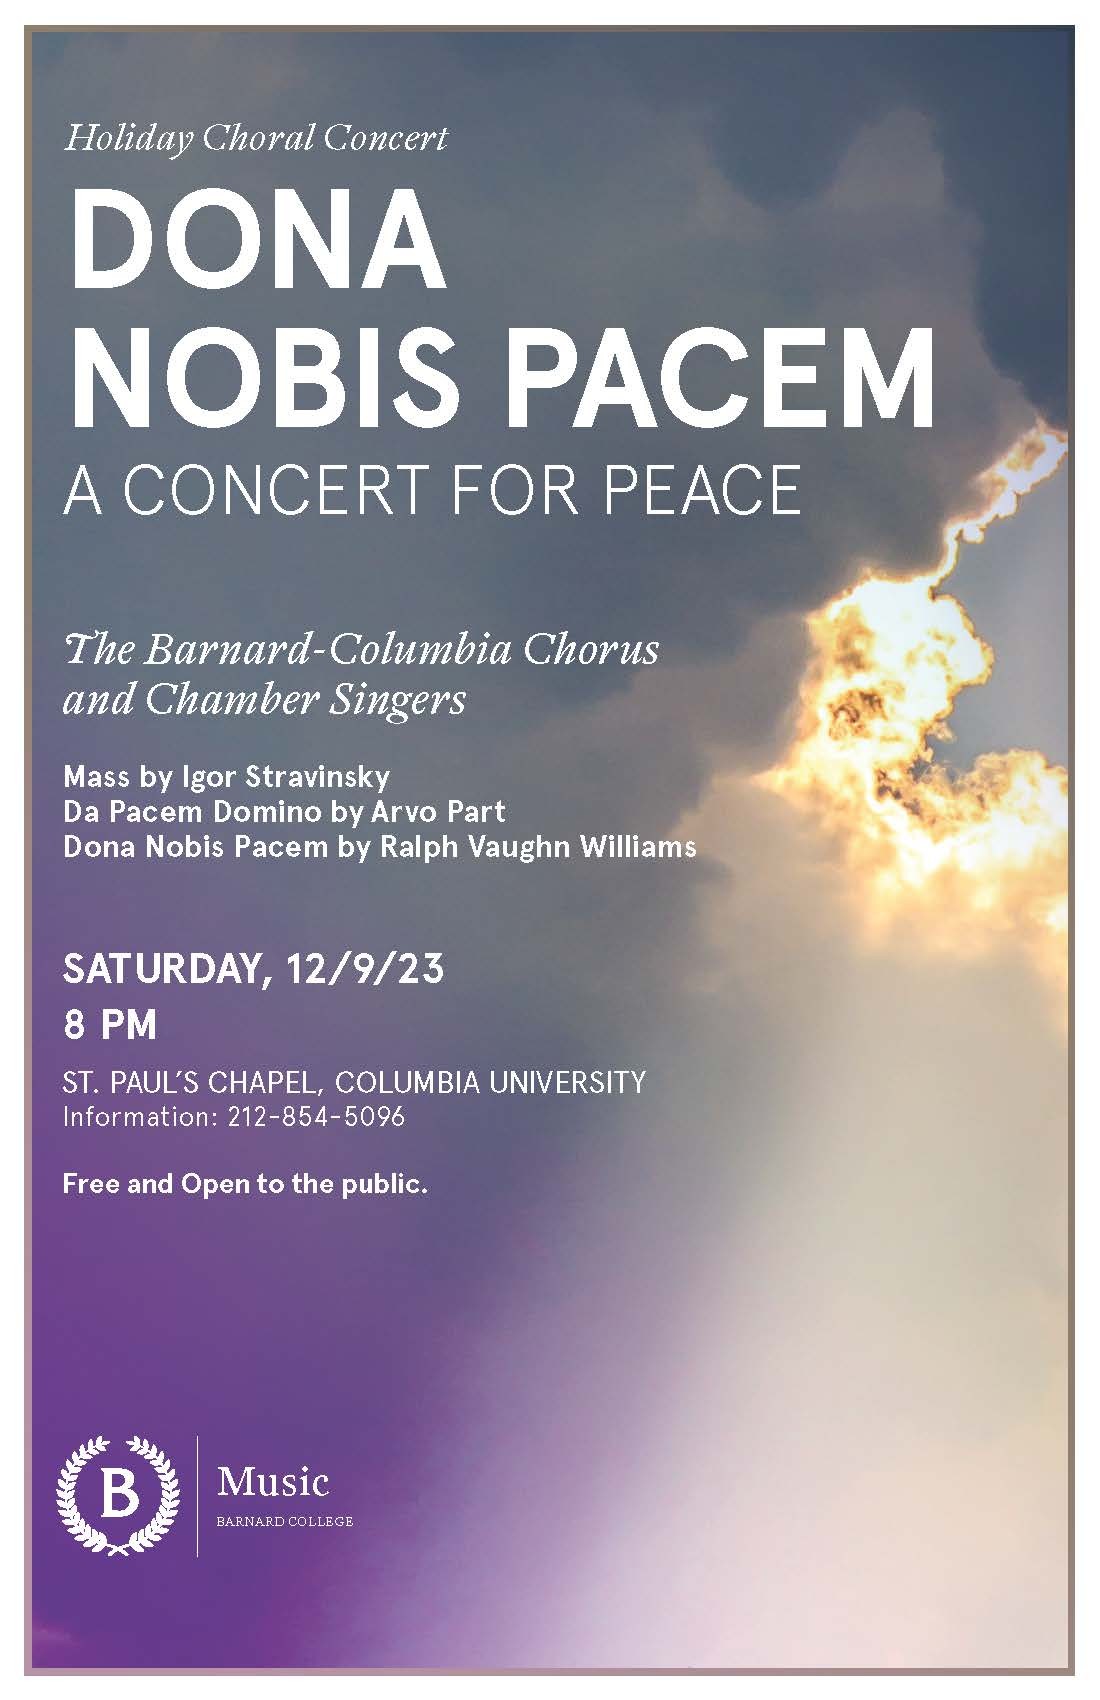 Poster for Dona Nobis Pacem concert